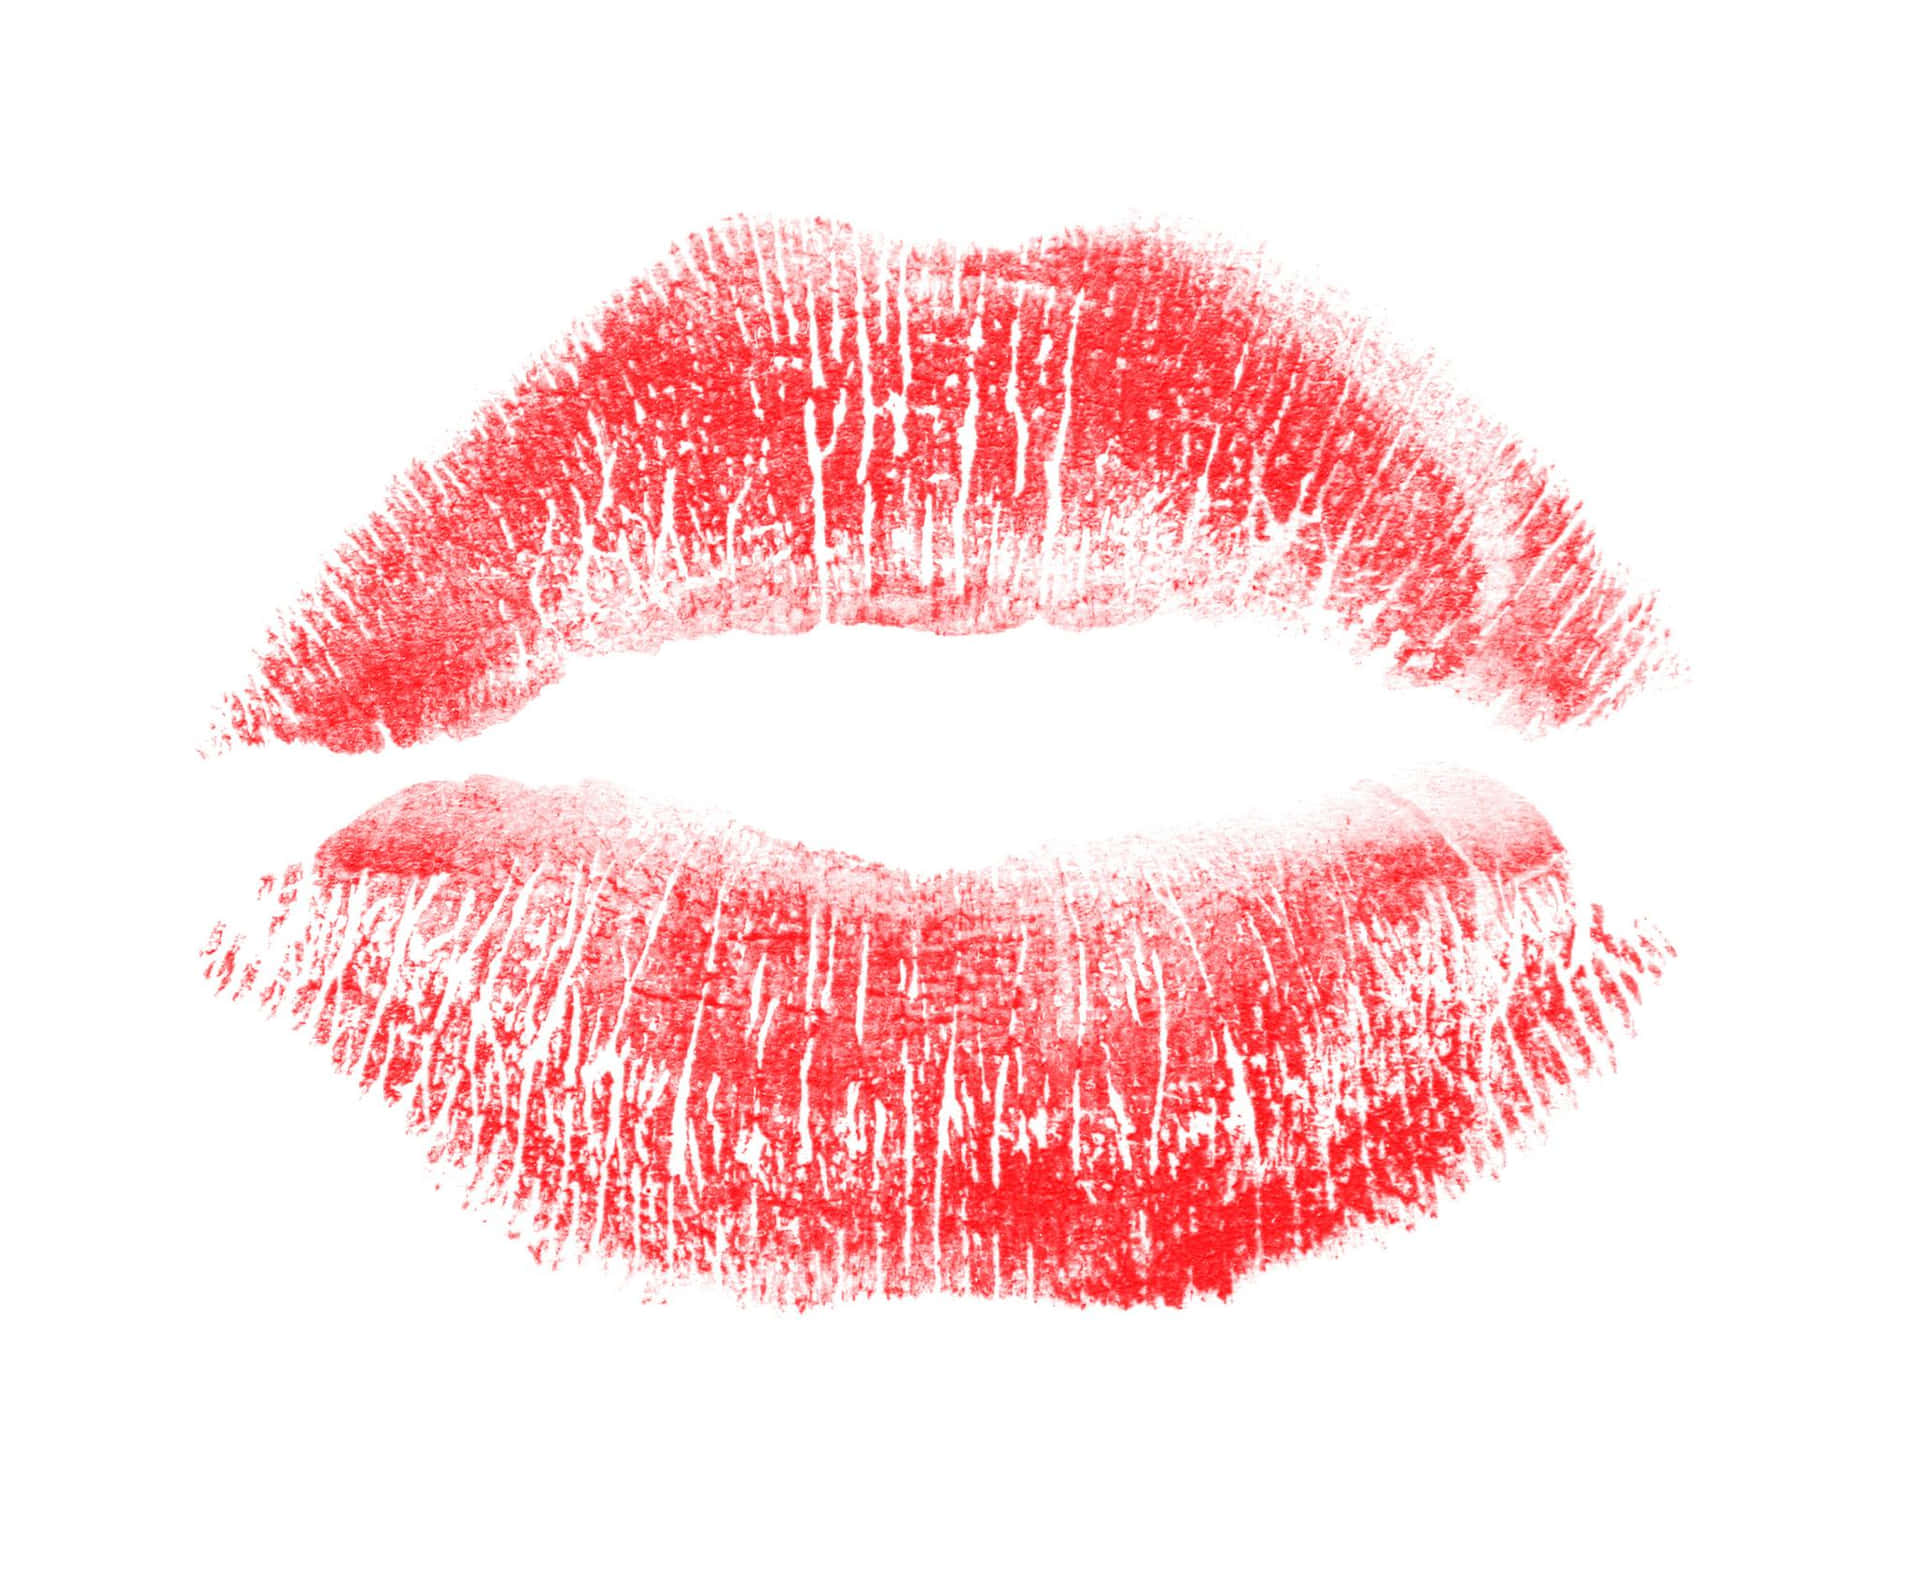 Caption: Vibrant Red Lips on Monochrome Background